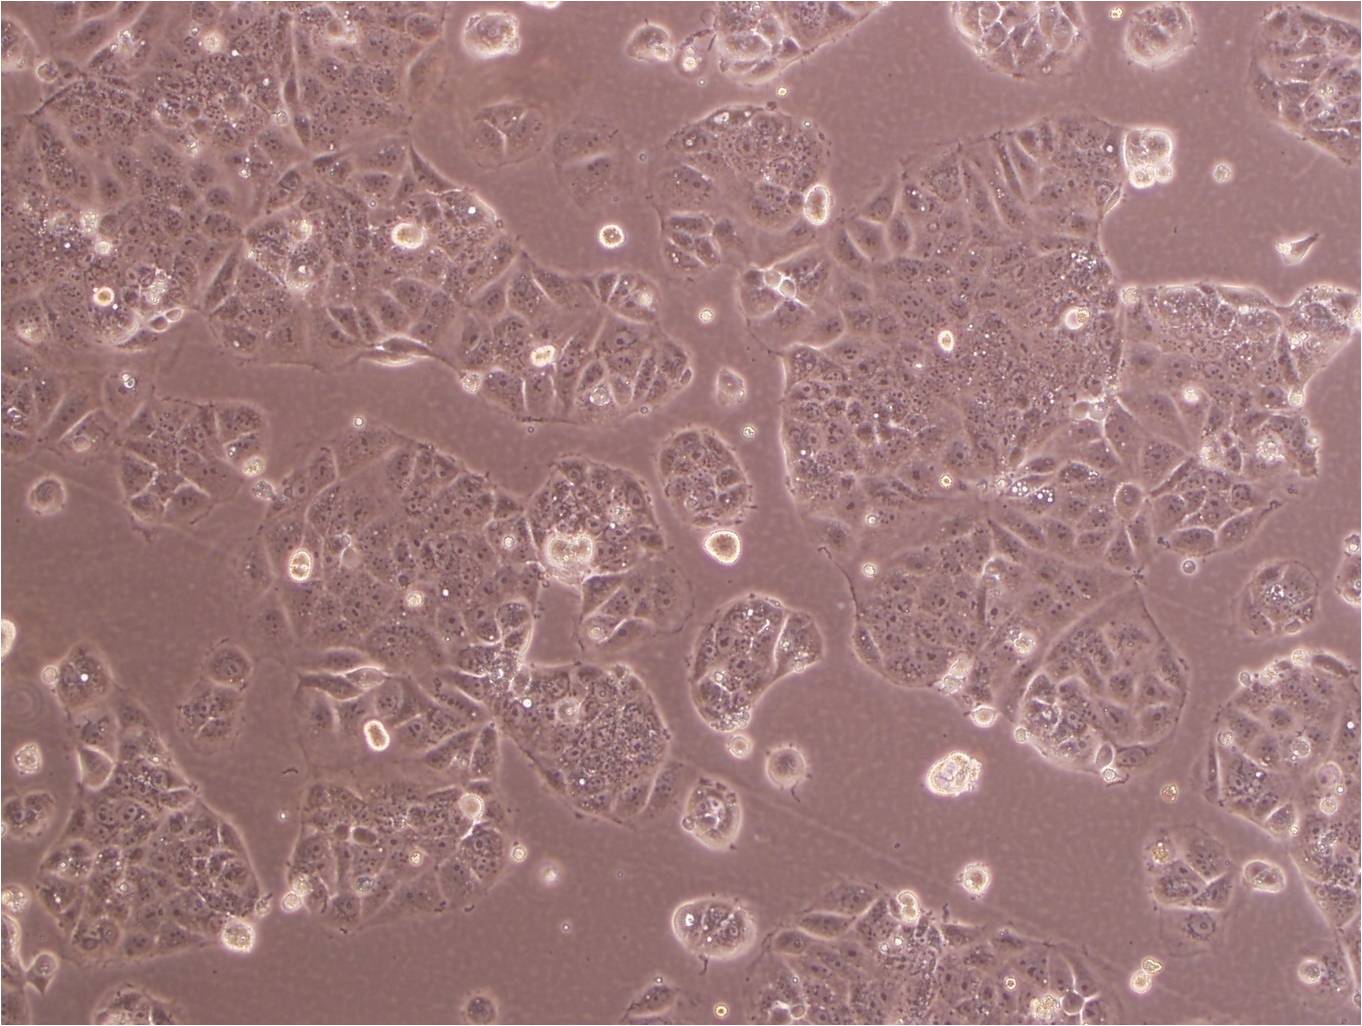 HCC-44 Cell:人肺癌细胞系,HCC-44 Cell